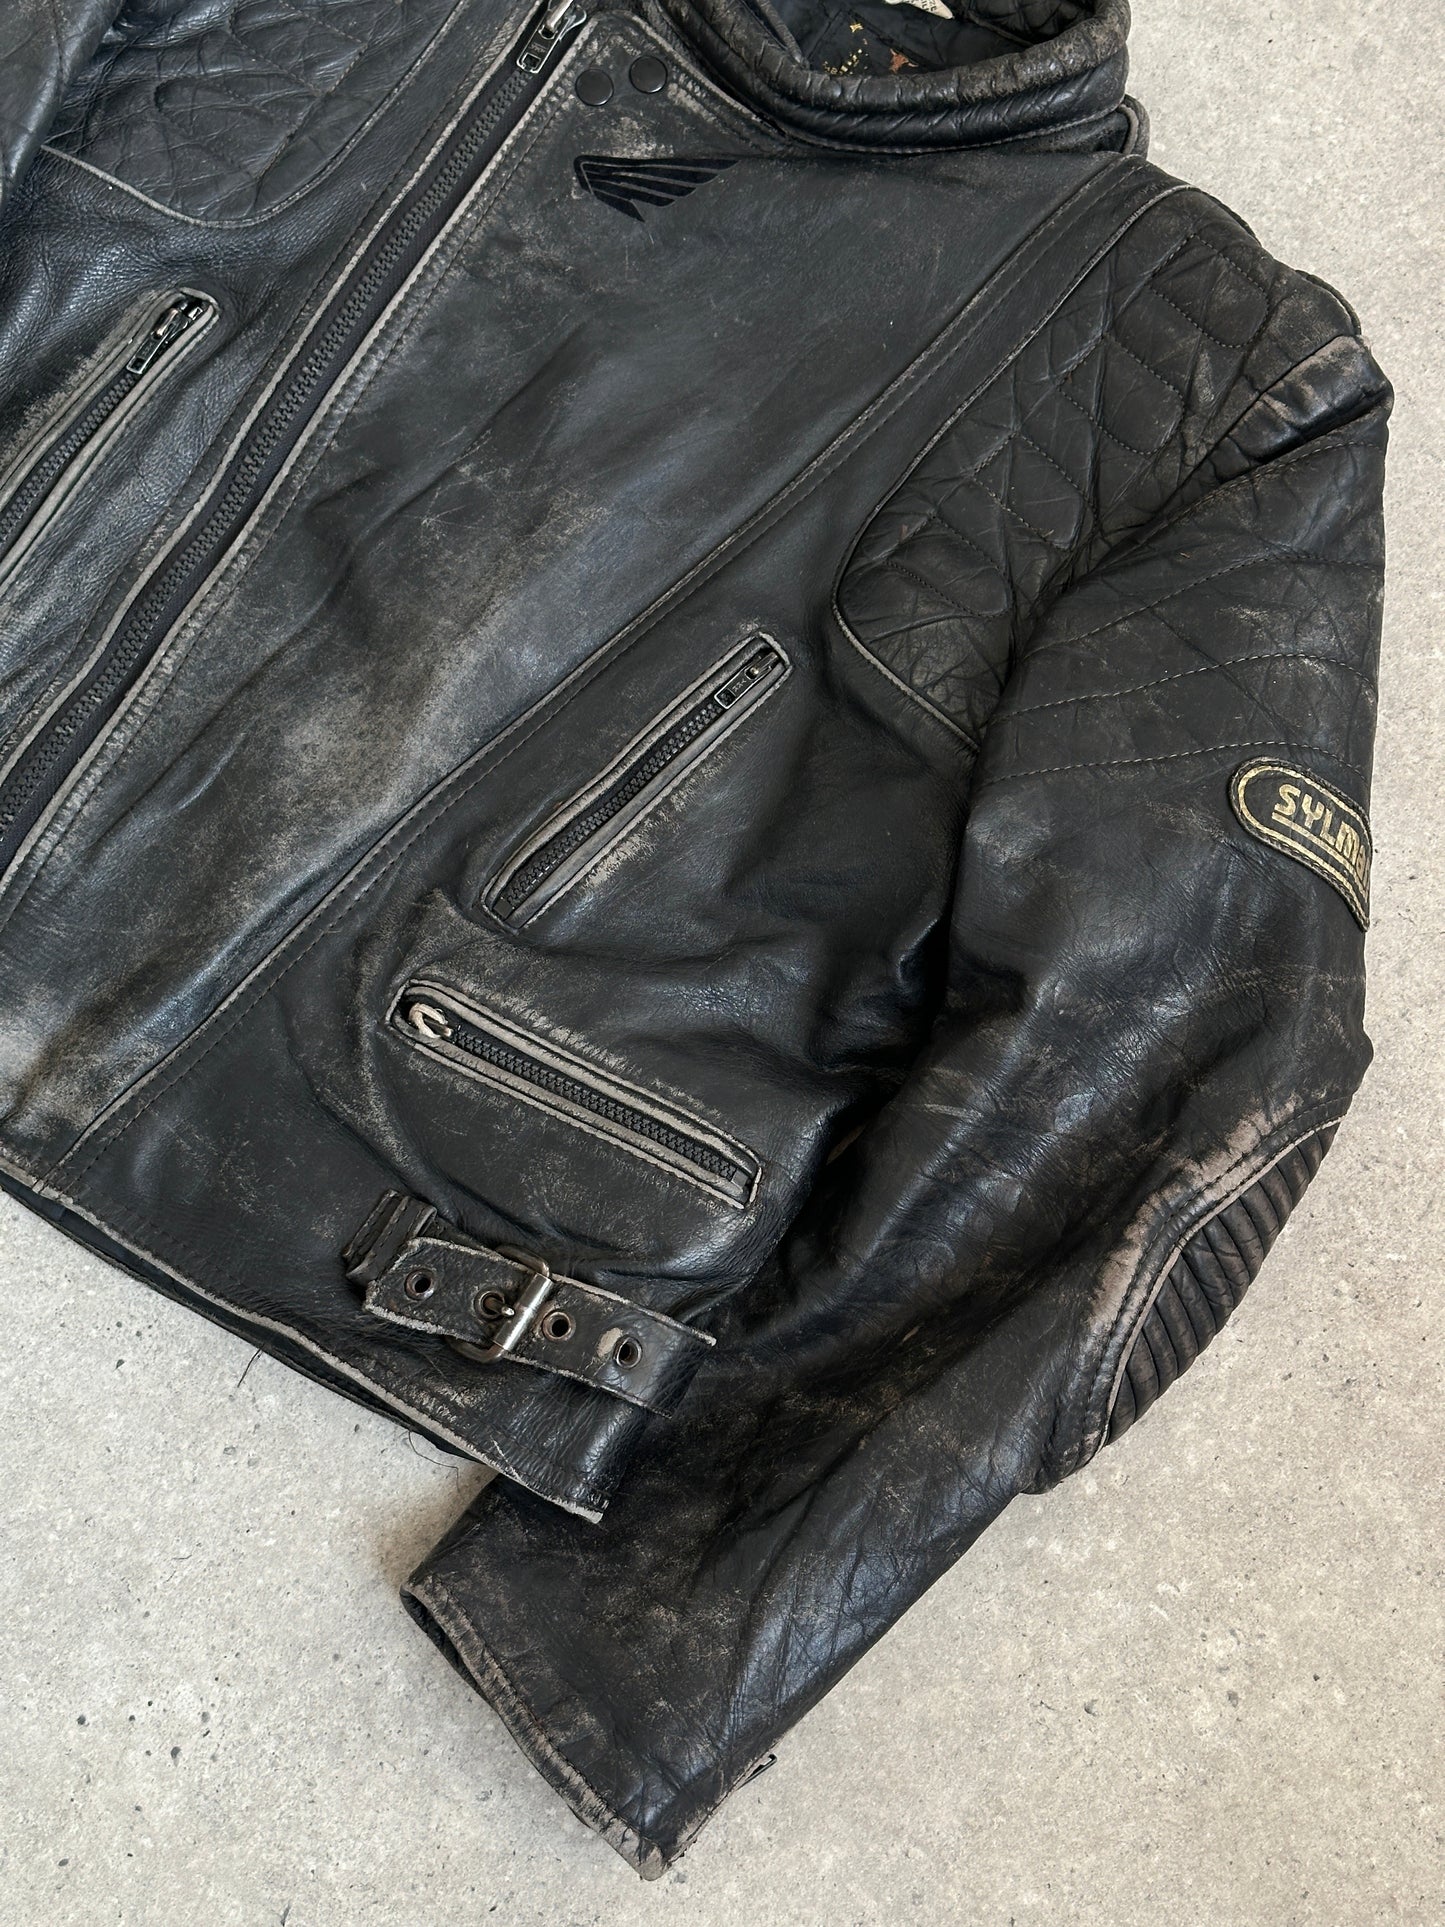 Vintage Motorcycle Distressed Leather Jacket - M/L